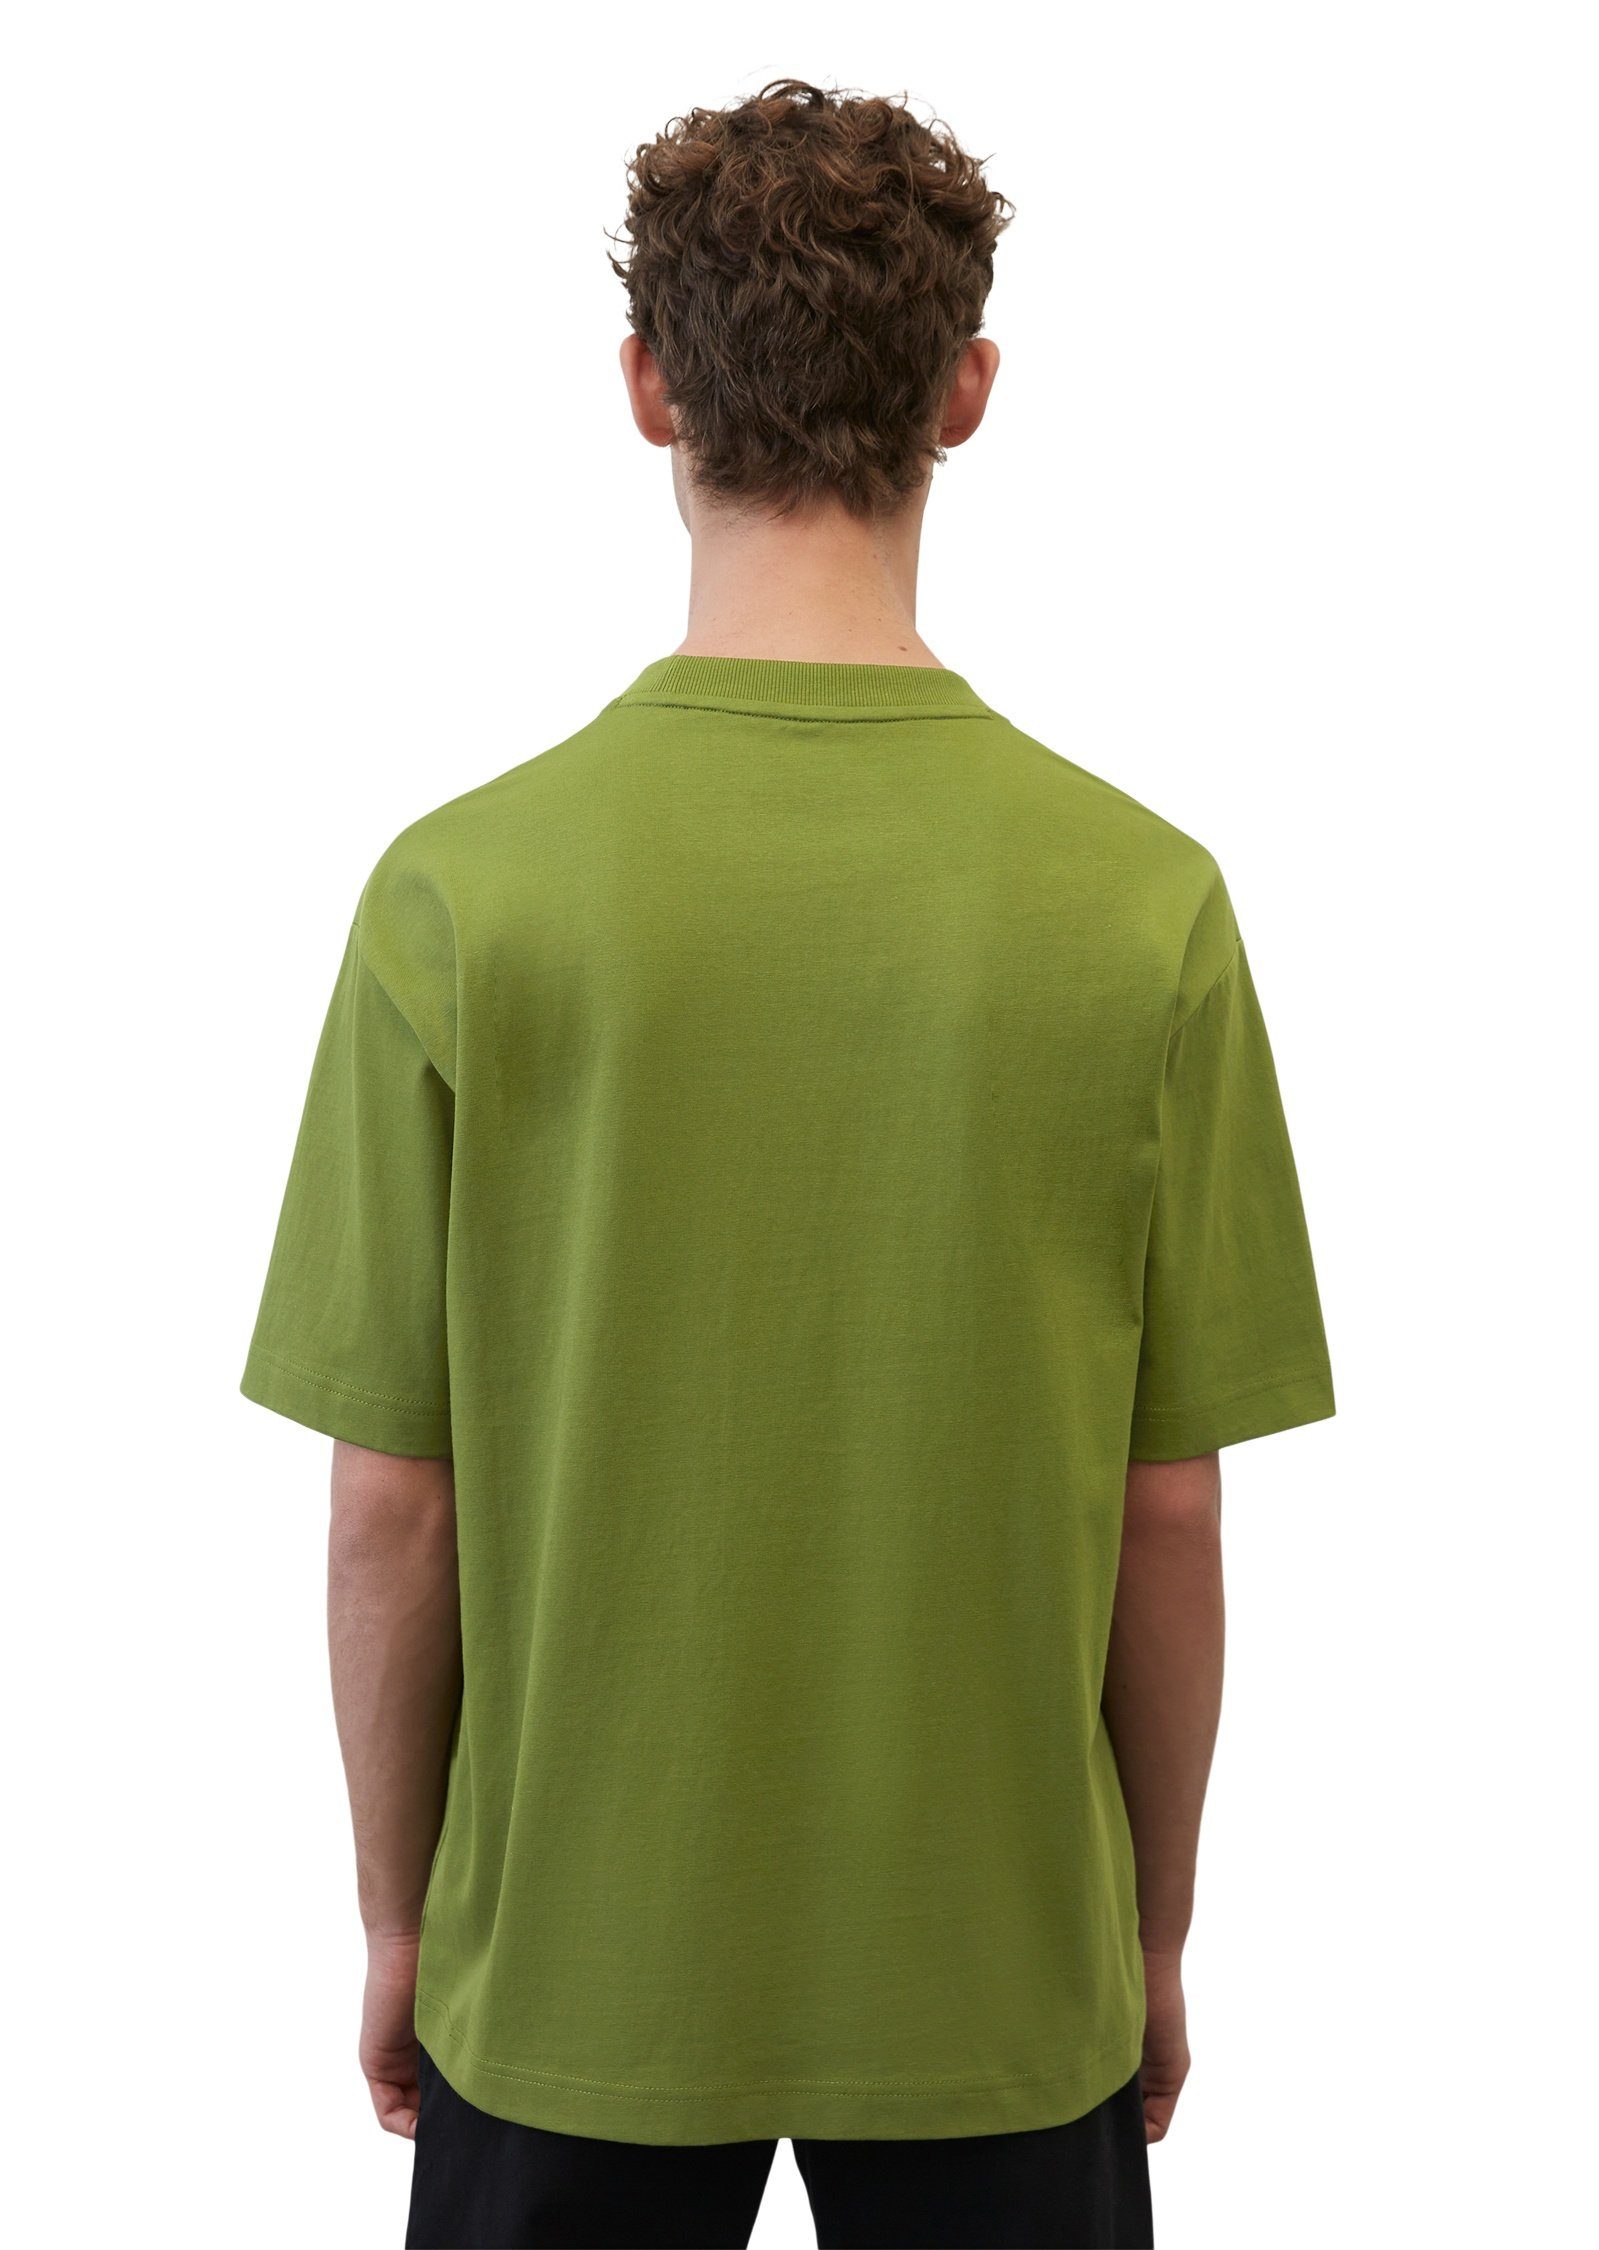 hochwertiger T-Shirt Bio-Baumwolle aus Marc dunkelgrün O'Polo